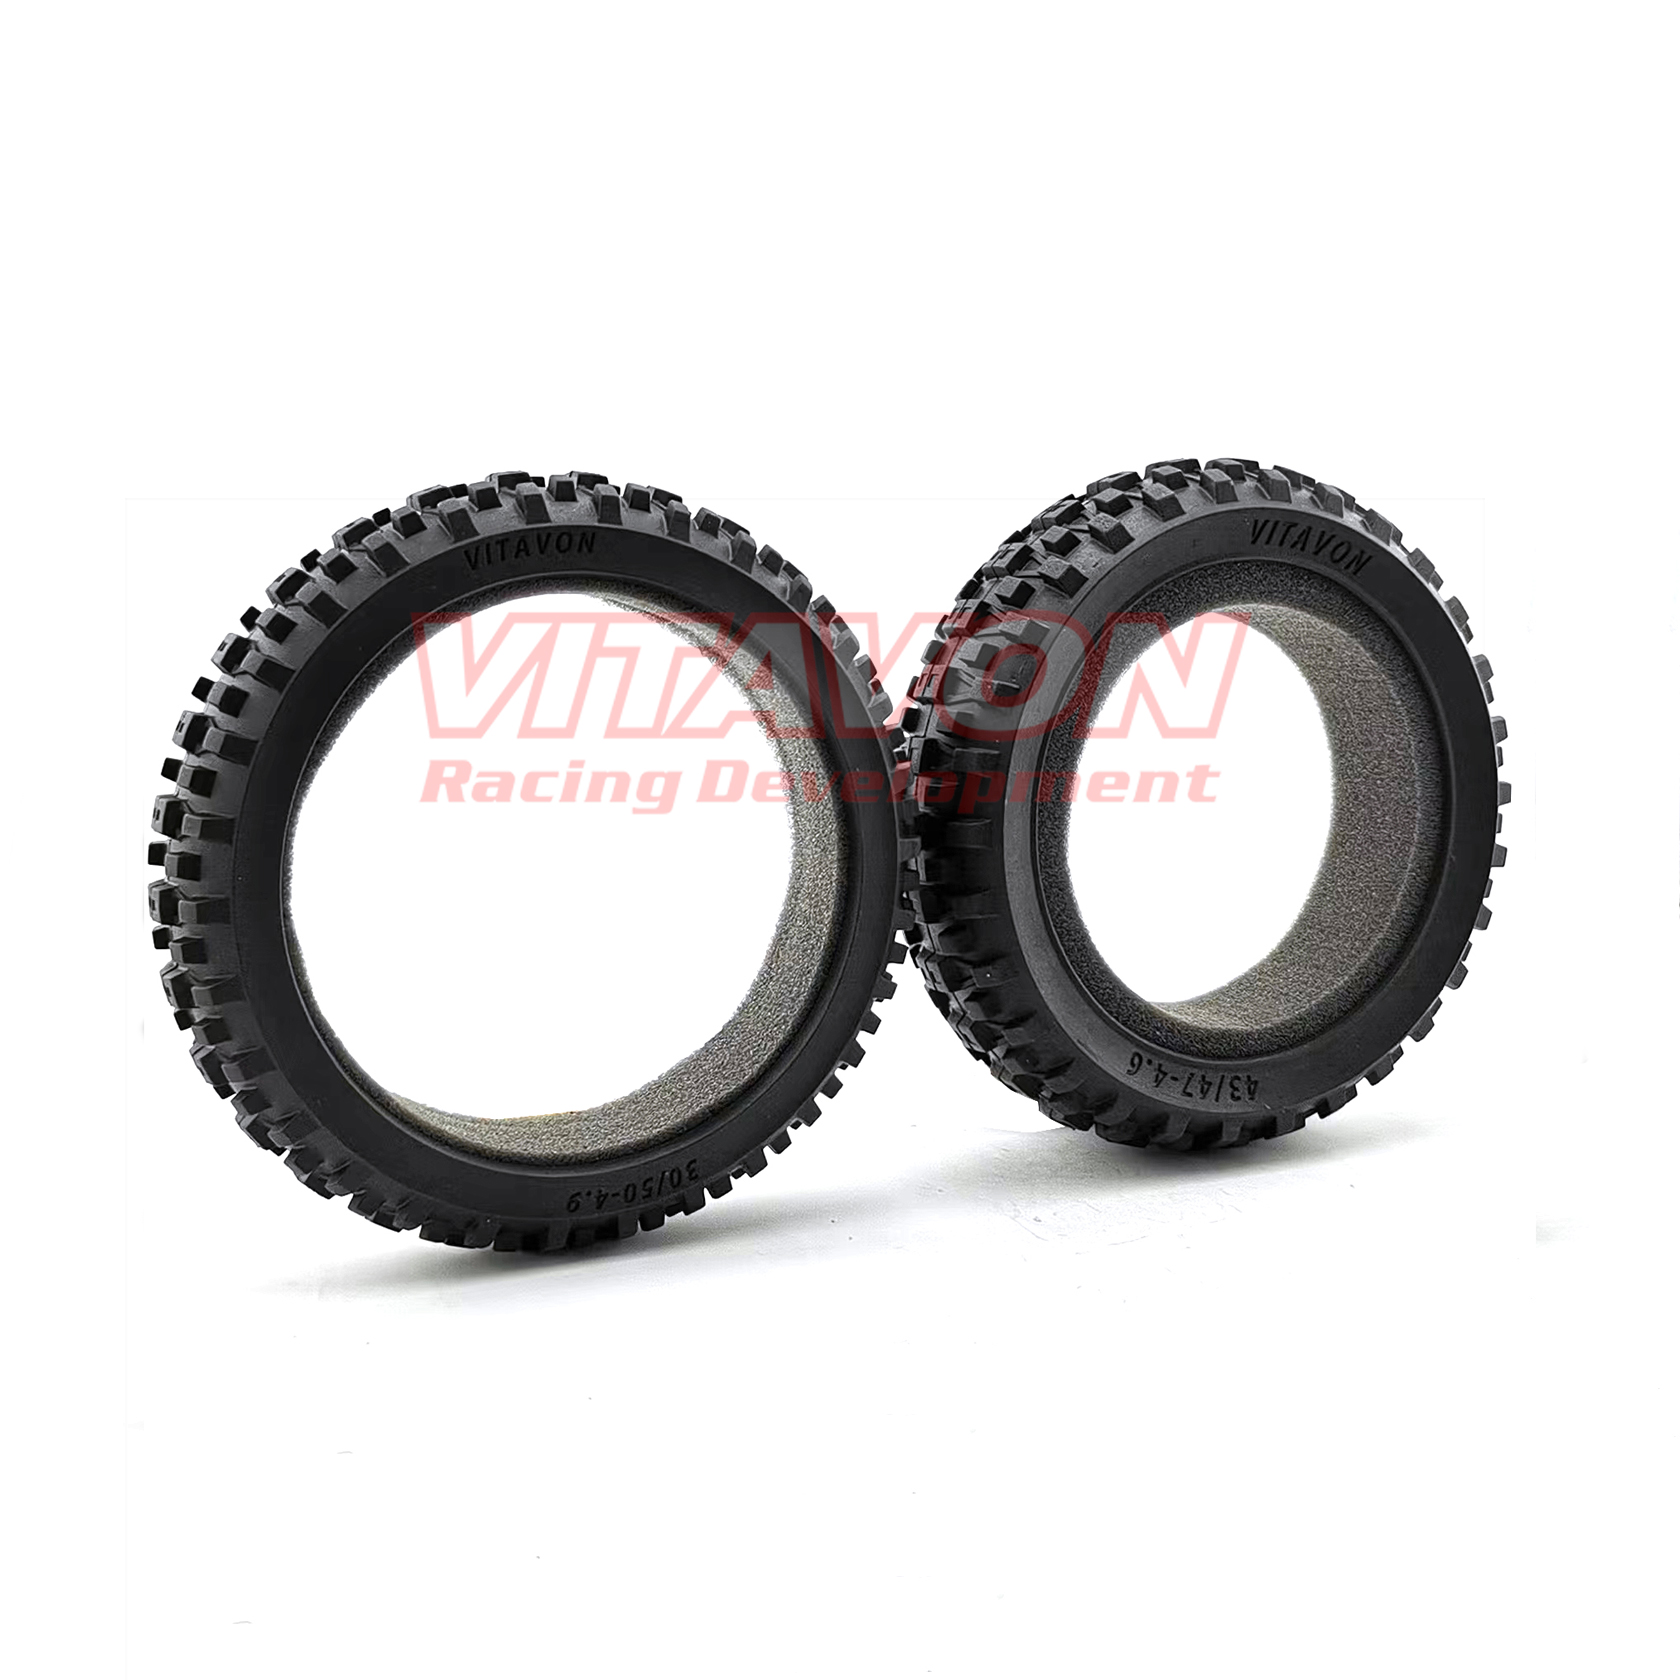 VITAVON Front & Rear Dirt Tire With Foam Included For Losi Promoto-MX Bike LOS46008 LOS46009